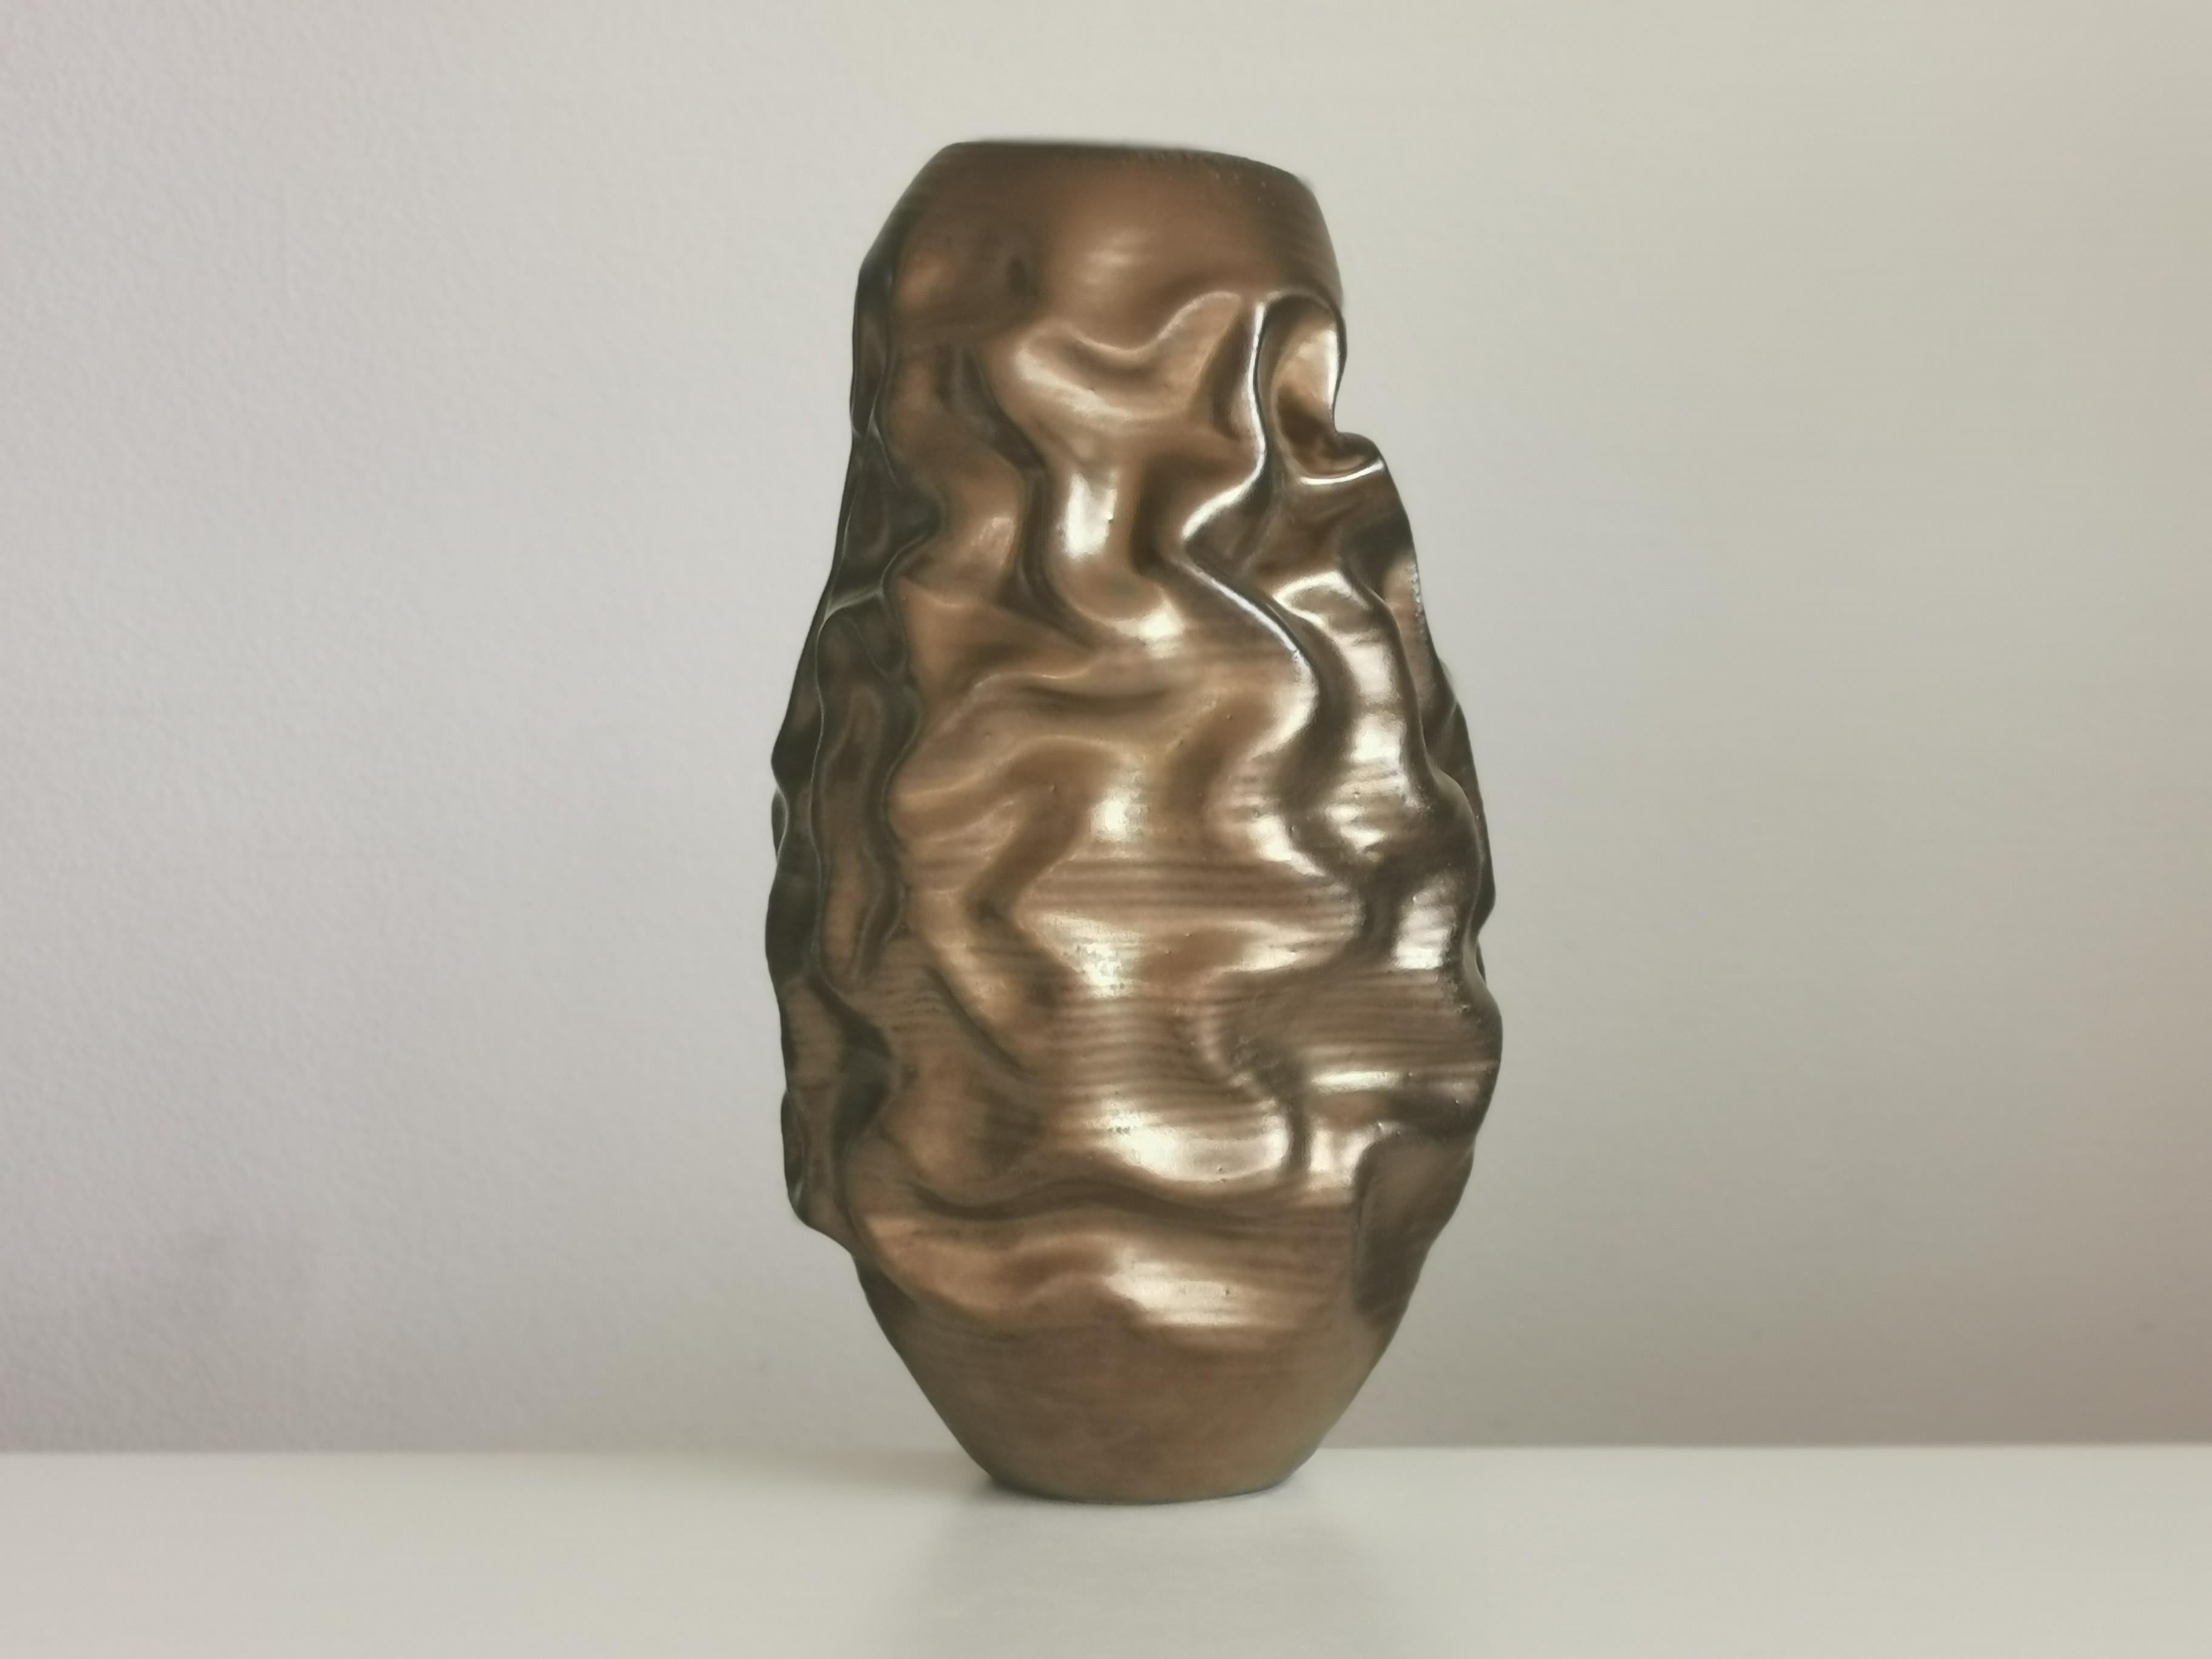 Spanish Tall Golden Dehydrated Form N.86, Contemporary Ceramic Sculpture, Objet D'art